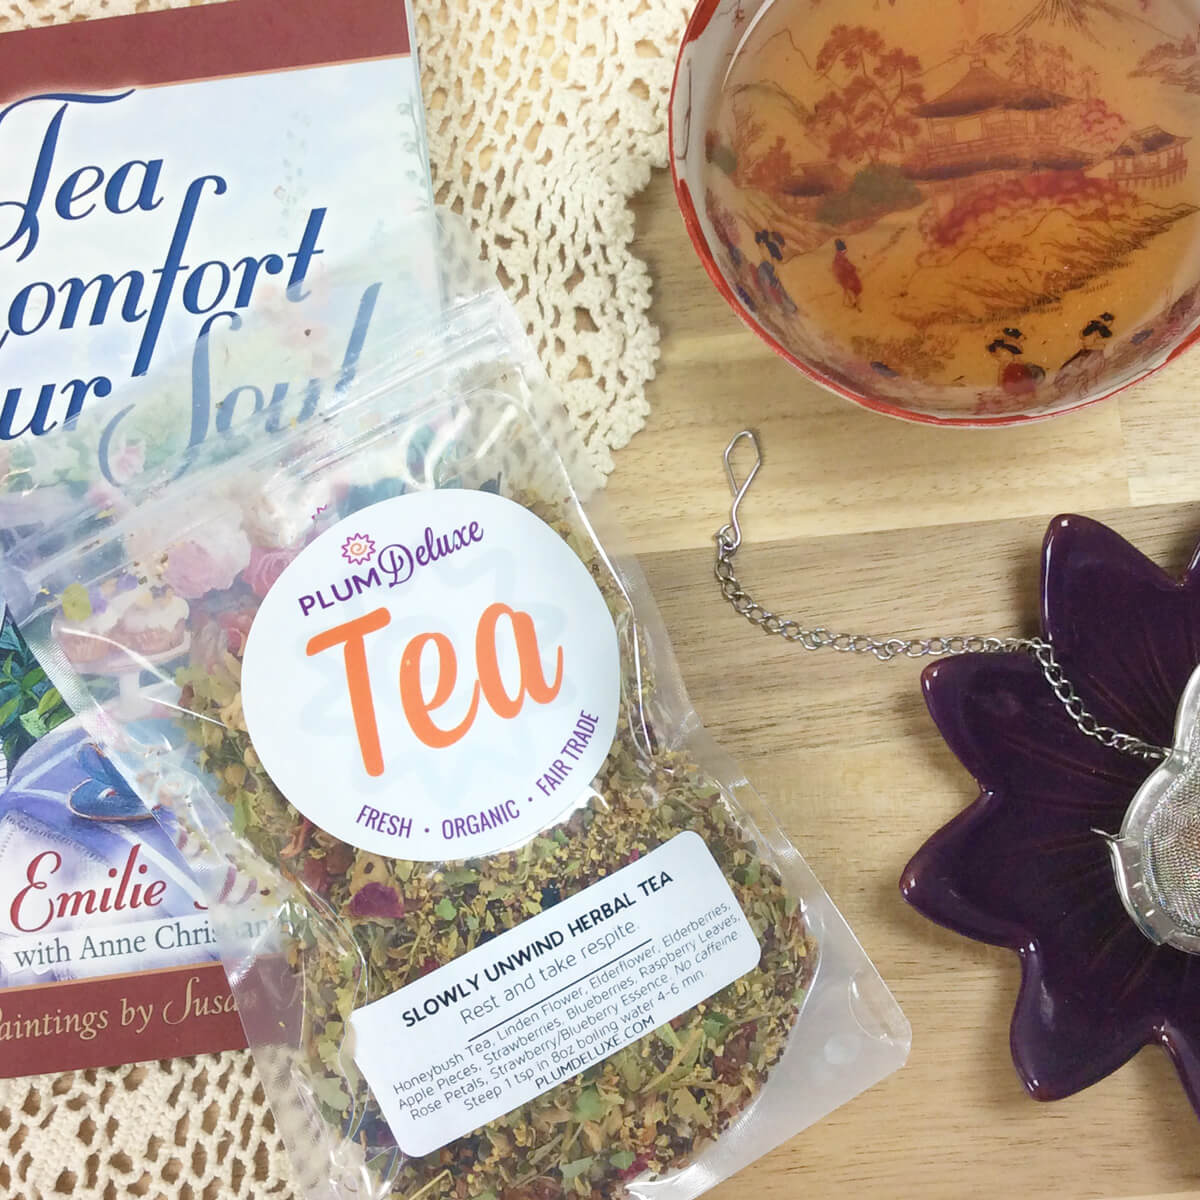 Slowly Unwind Herbal Tea (Linden Flower - Elderflower - Berry) by Plum Deluxe Tea